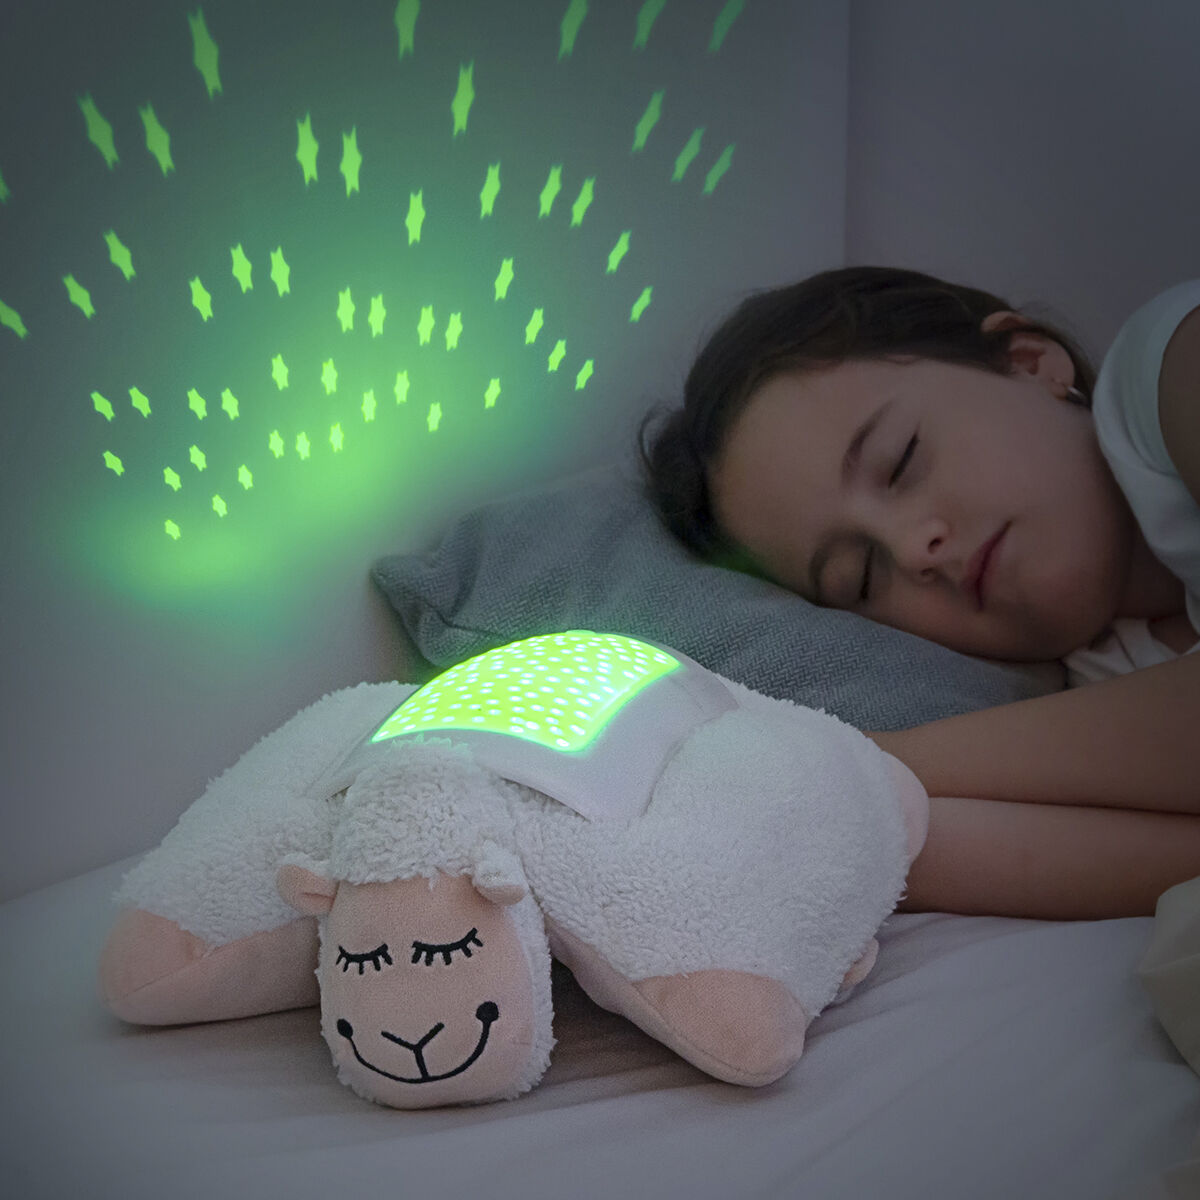 InnovaGoods Knuffelschaap met LED Projector